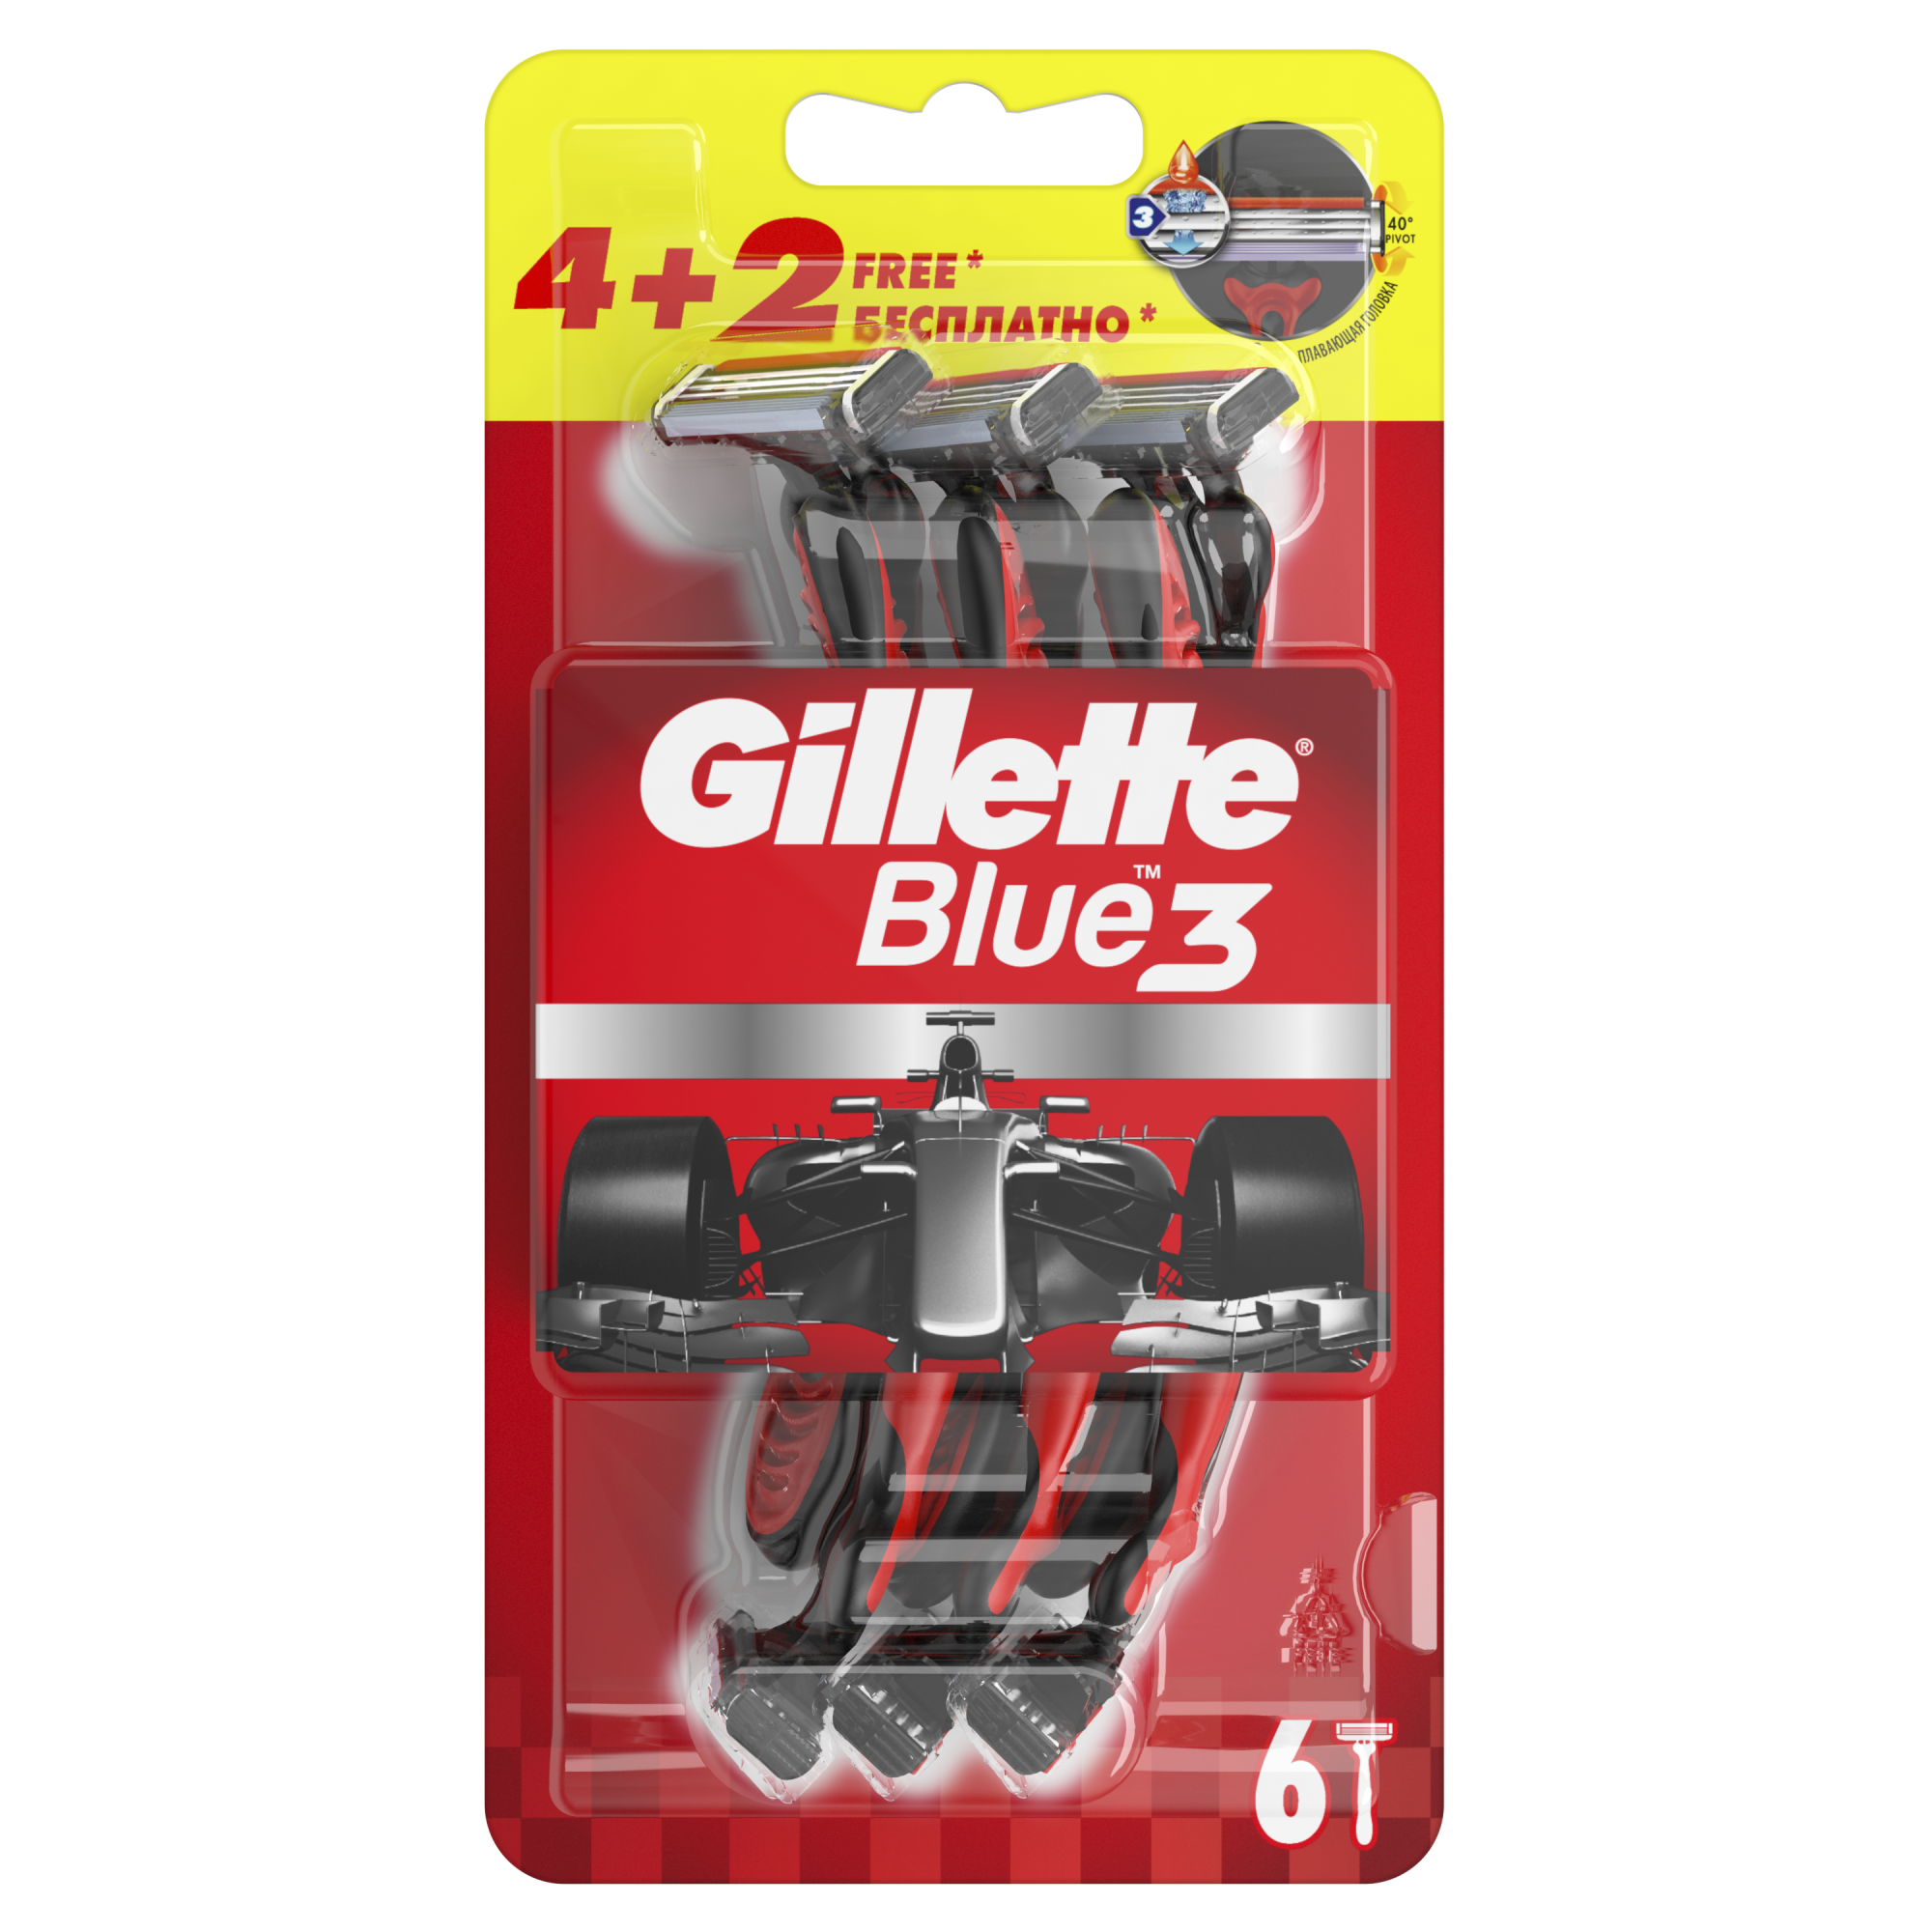 Бритвы одноразовые "Gillette Blue 3 Red" 6 штук